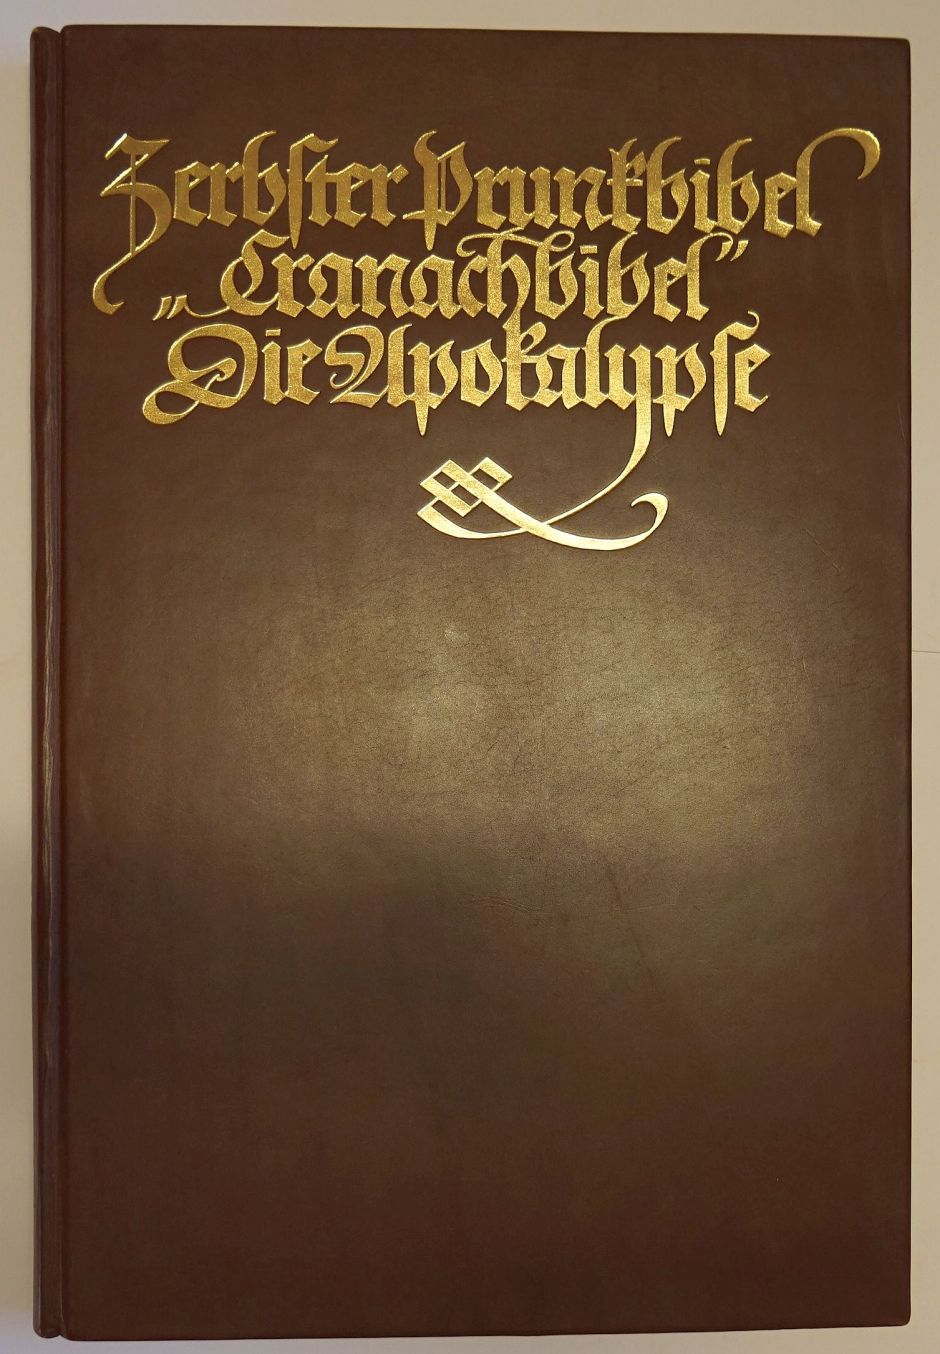 Lot 1450, Auction  115, Zerbster Prunkbibel, "Cranachbibel". Die Apokalypse.